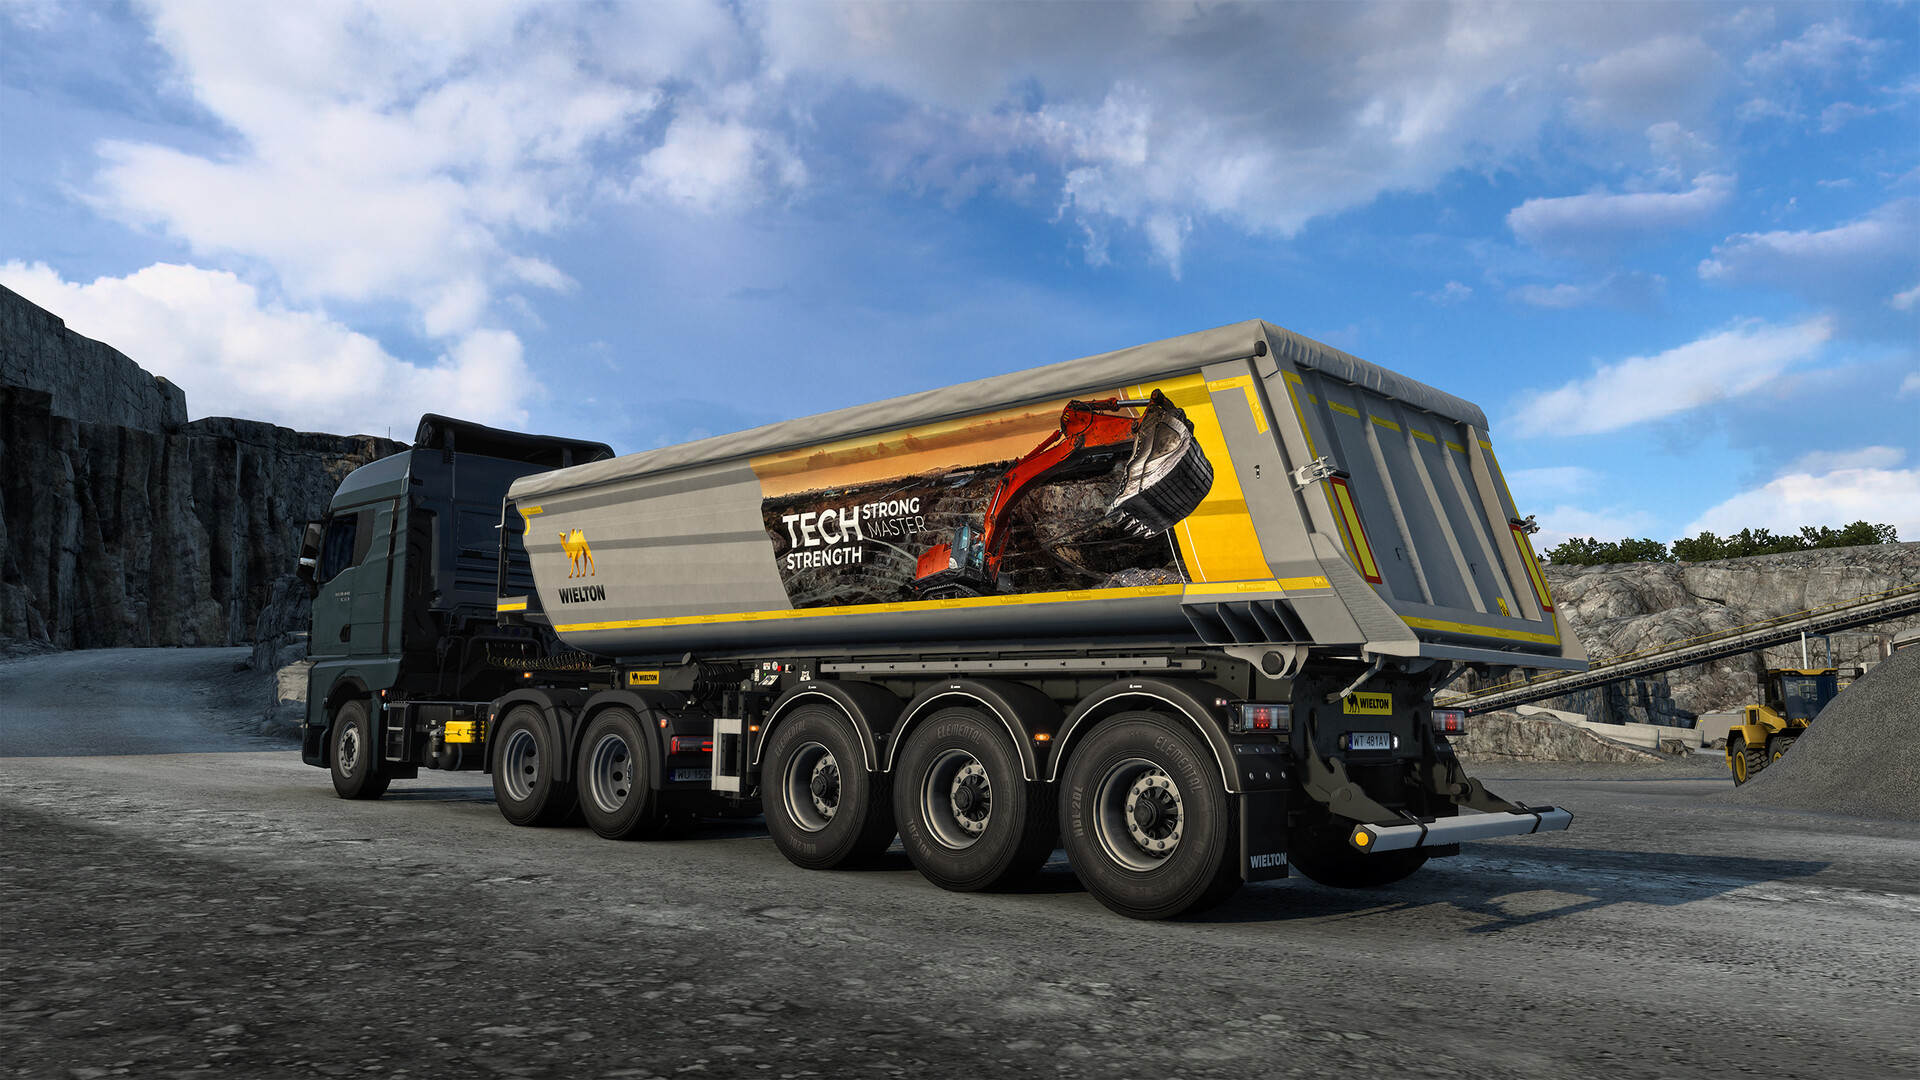 Euro Truck Simulator 2 - Wielton Trailer Pack on Steam